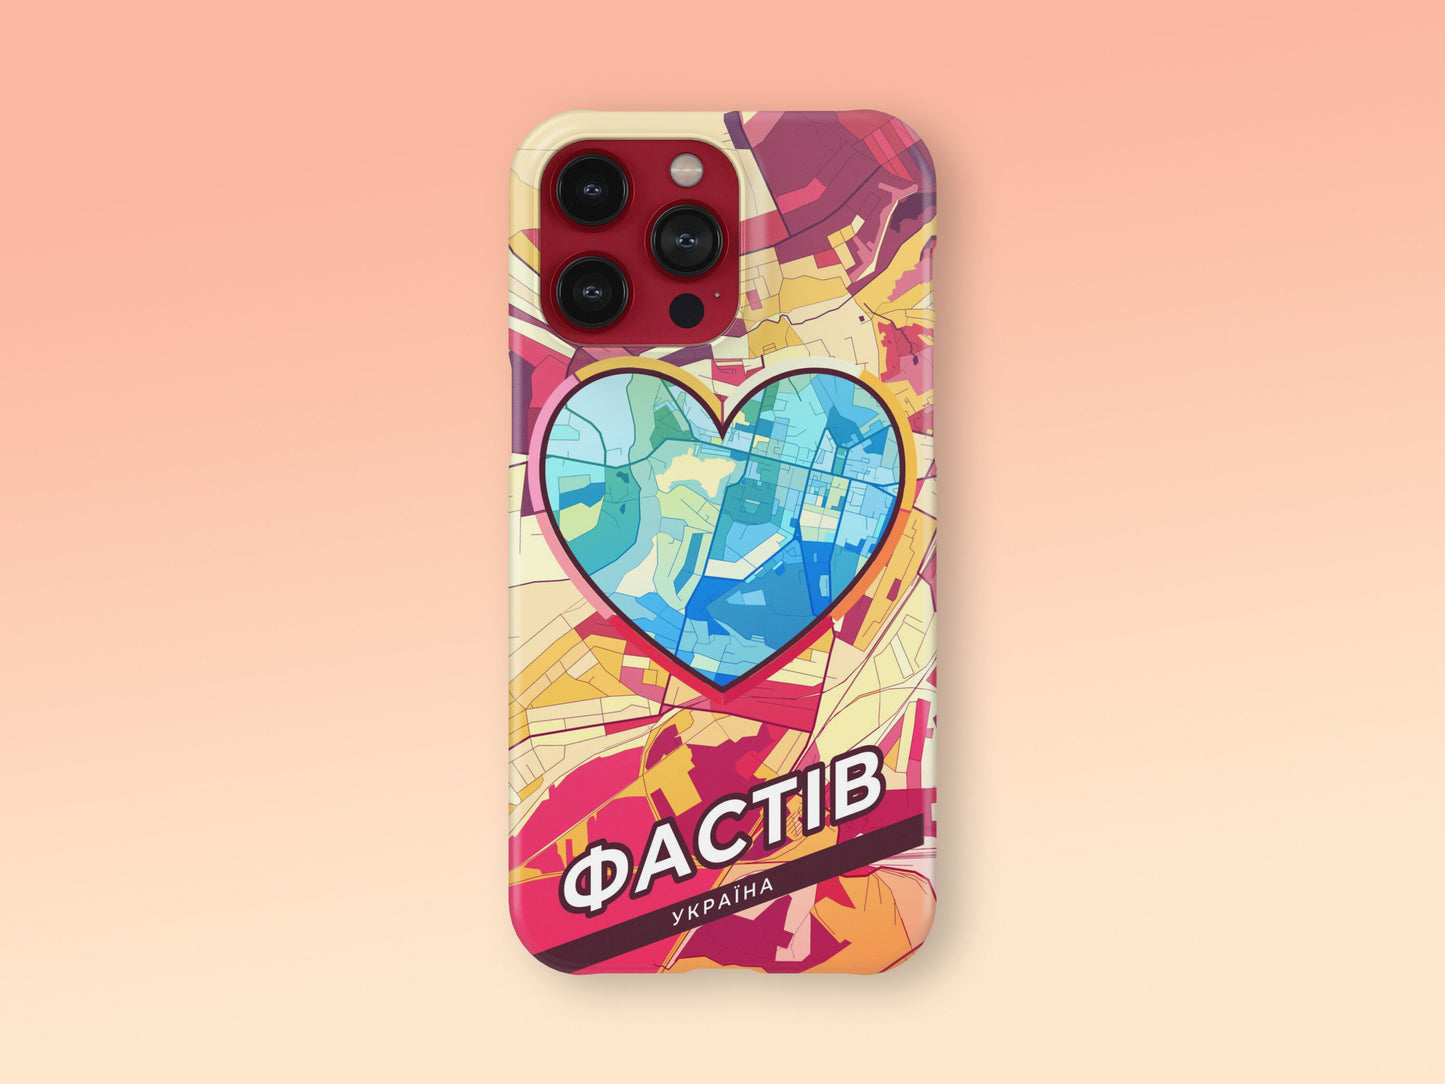 Fastiv Ukraine slim phone case with colorful icon. Birthday, wedding or housewarming gift. Couple match cases. 2